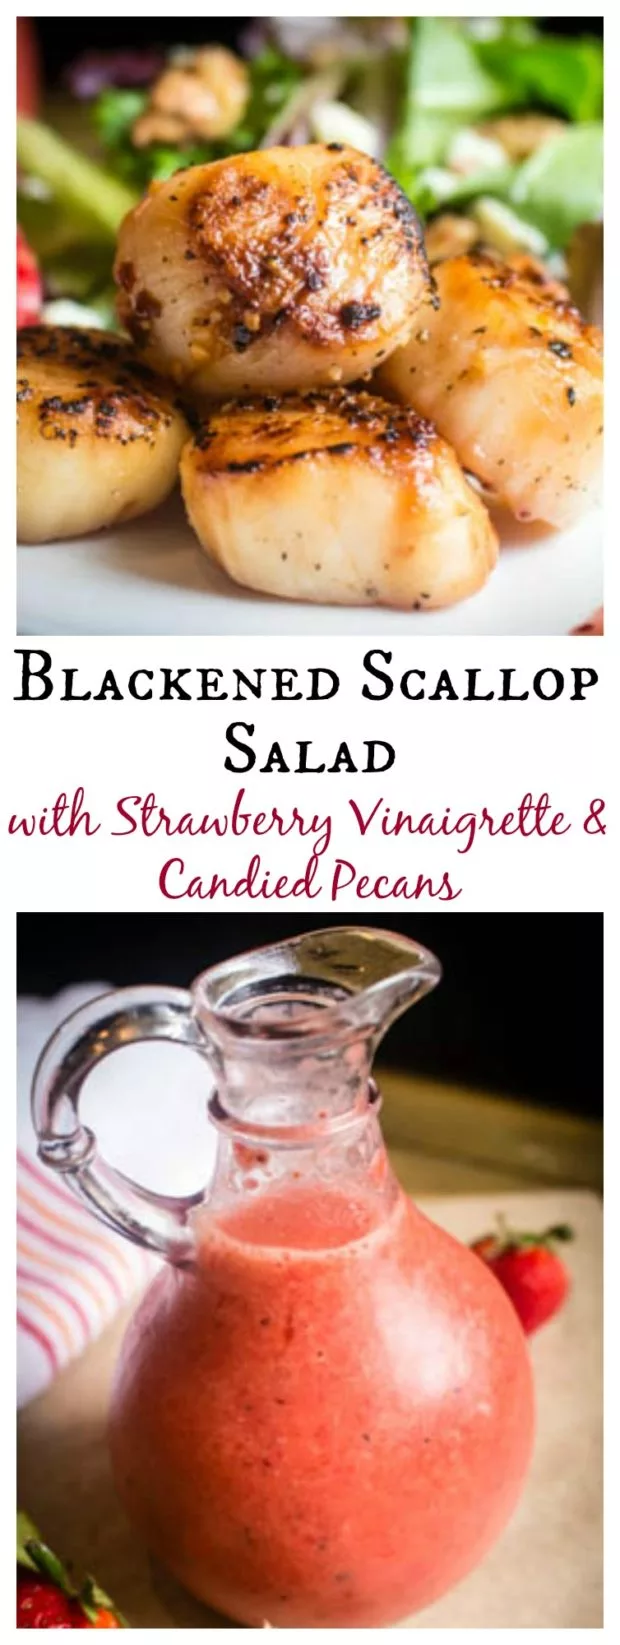 Blacked Scallop Salad